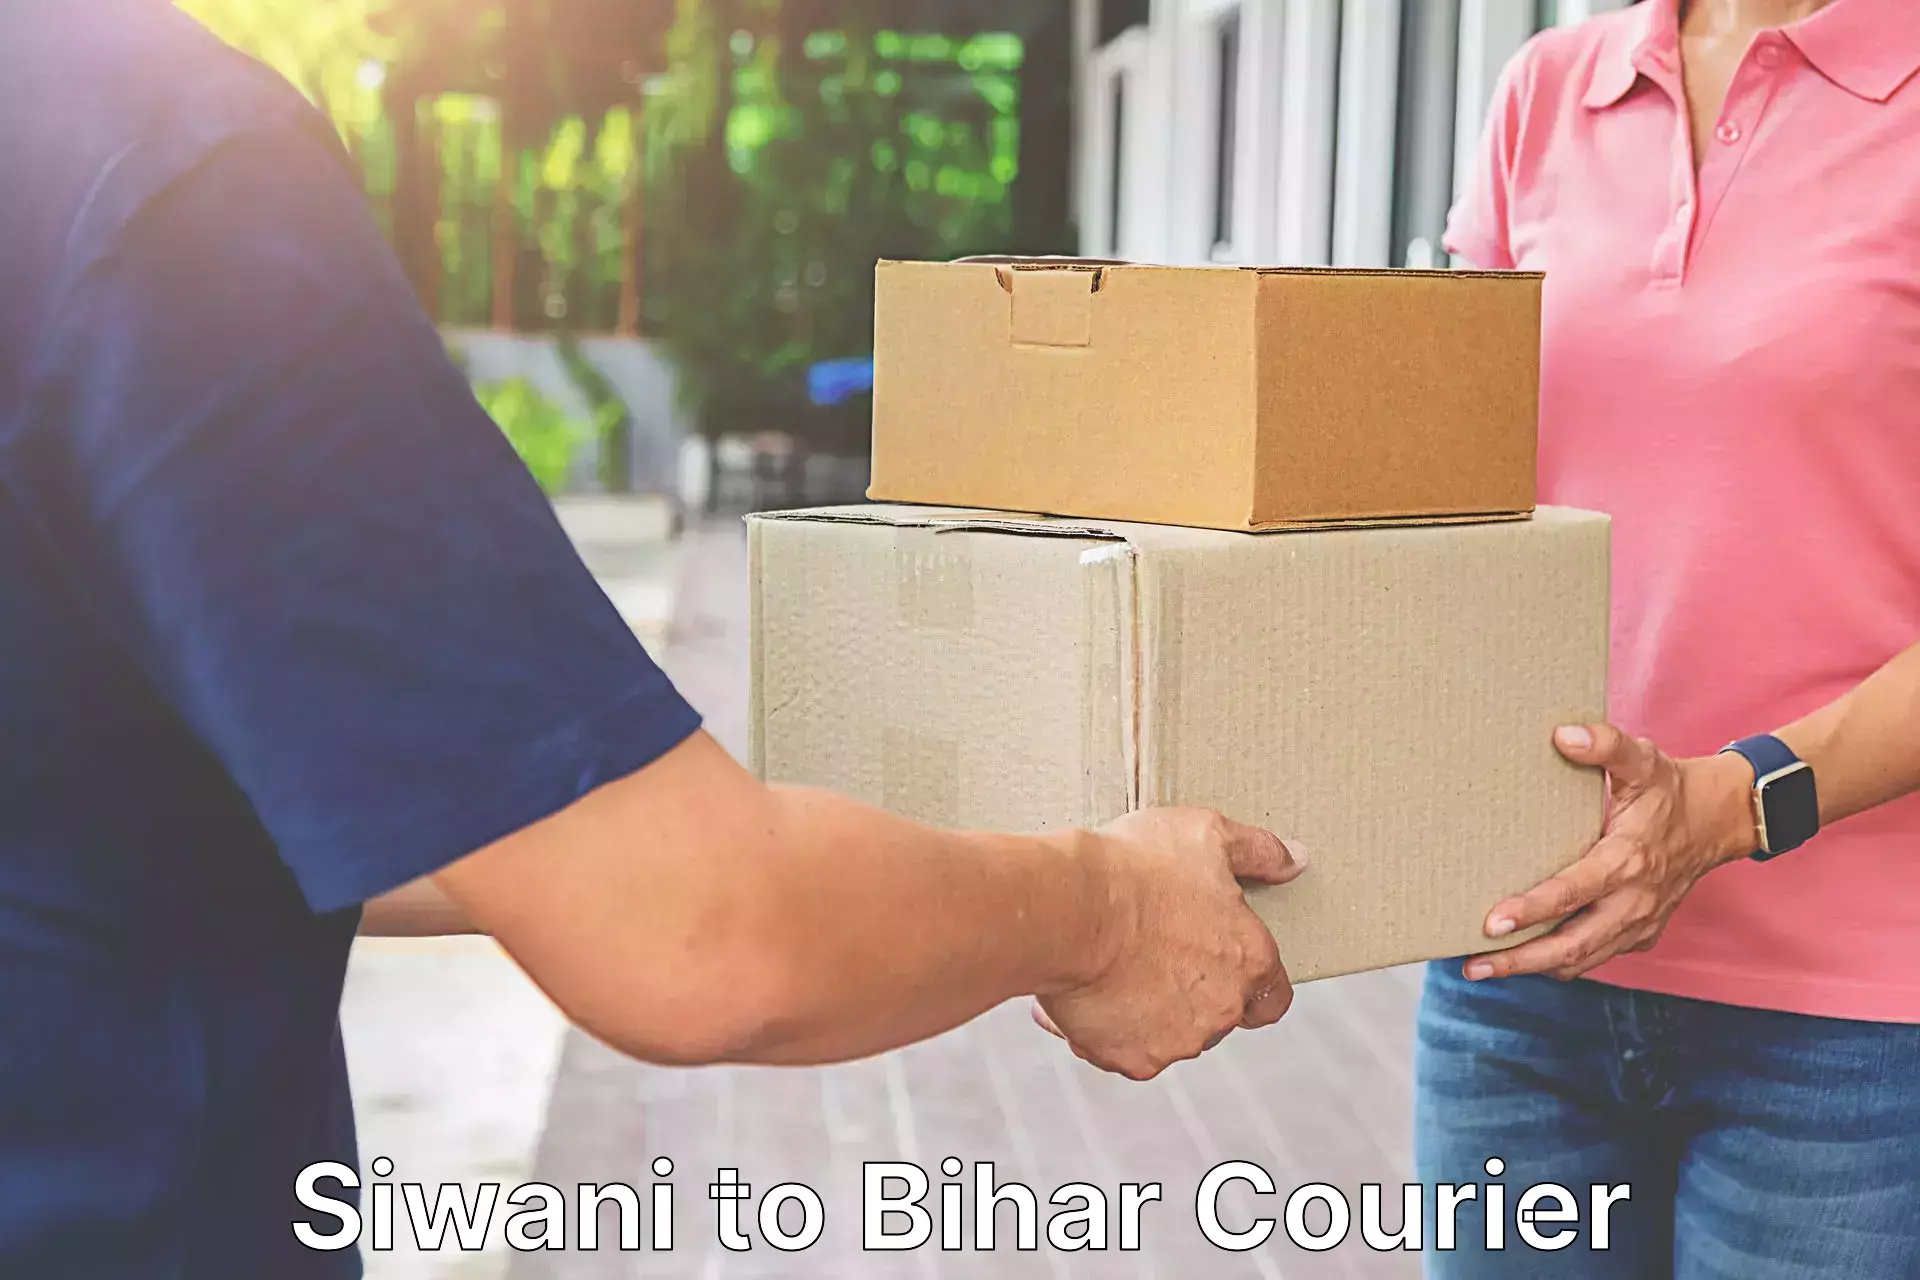 Doorstep delivery service Siwani to Bihar